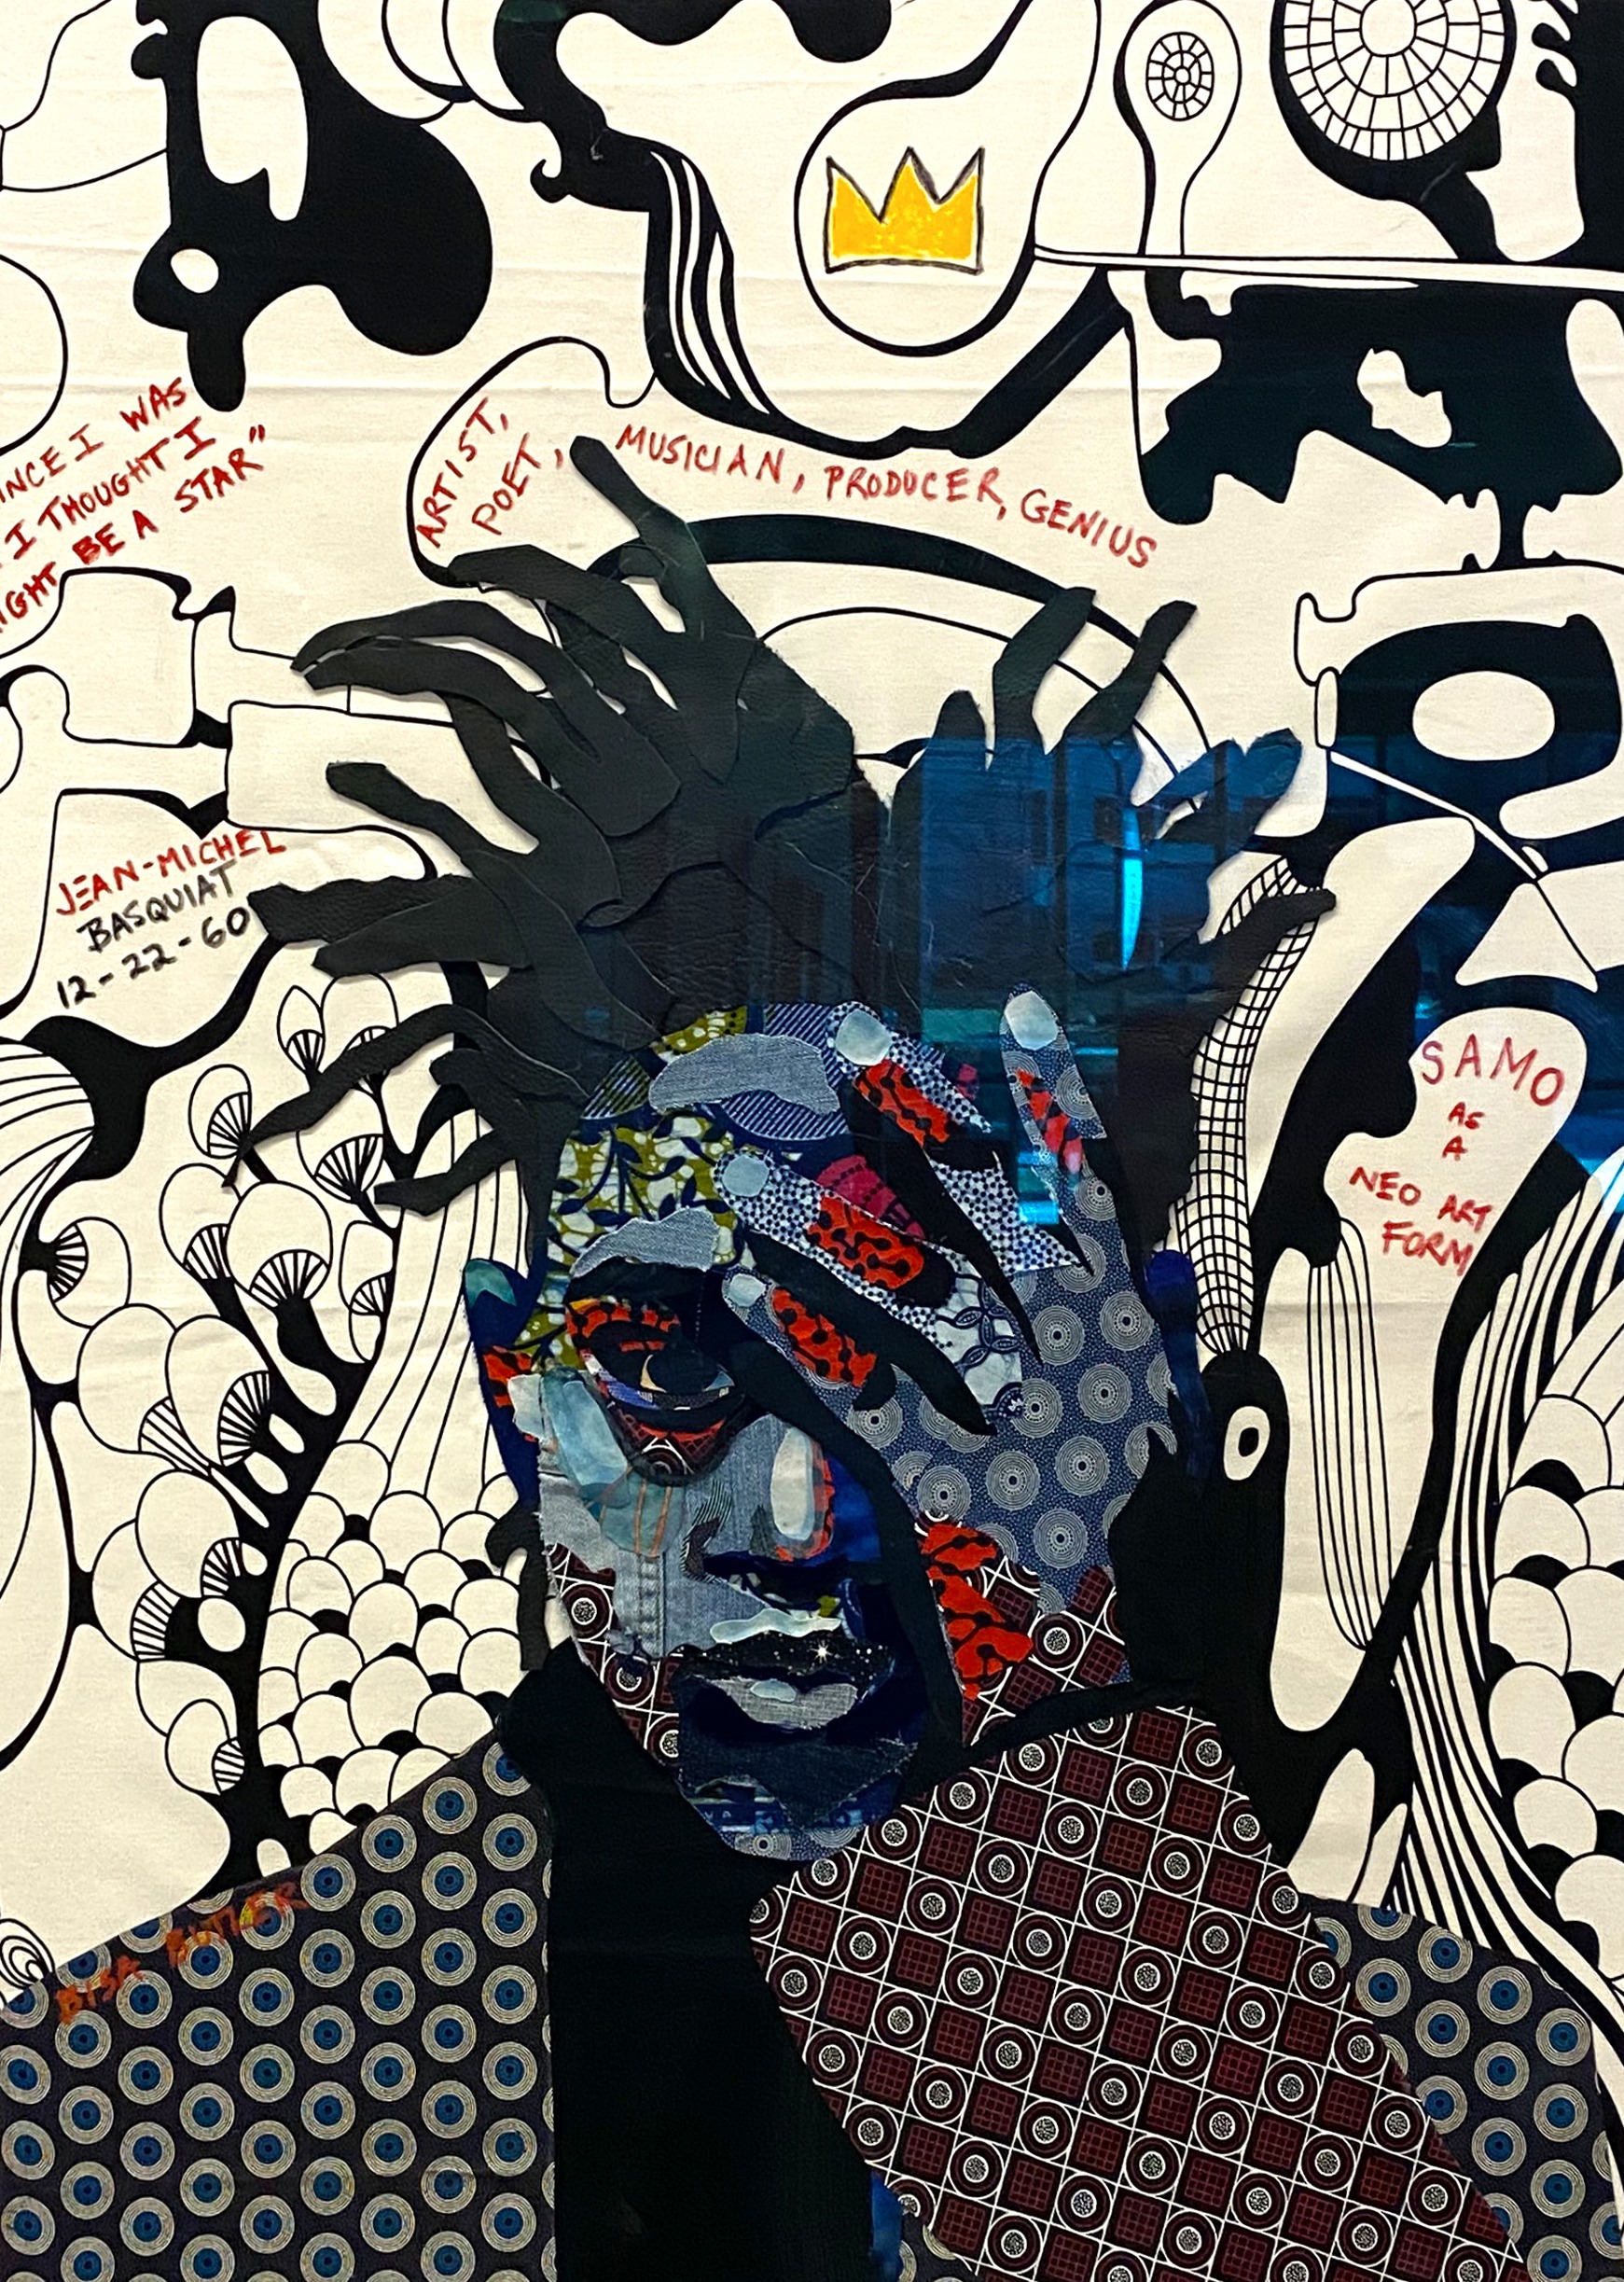 Basquiat mixed media collage